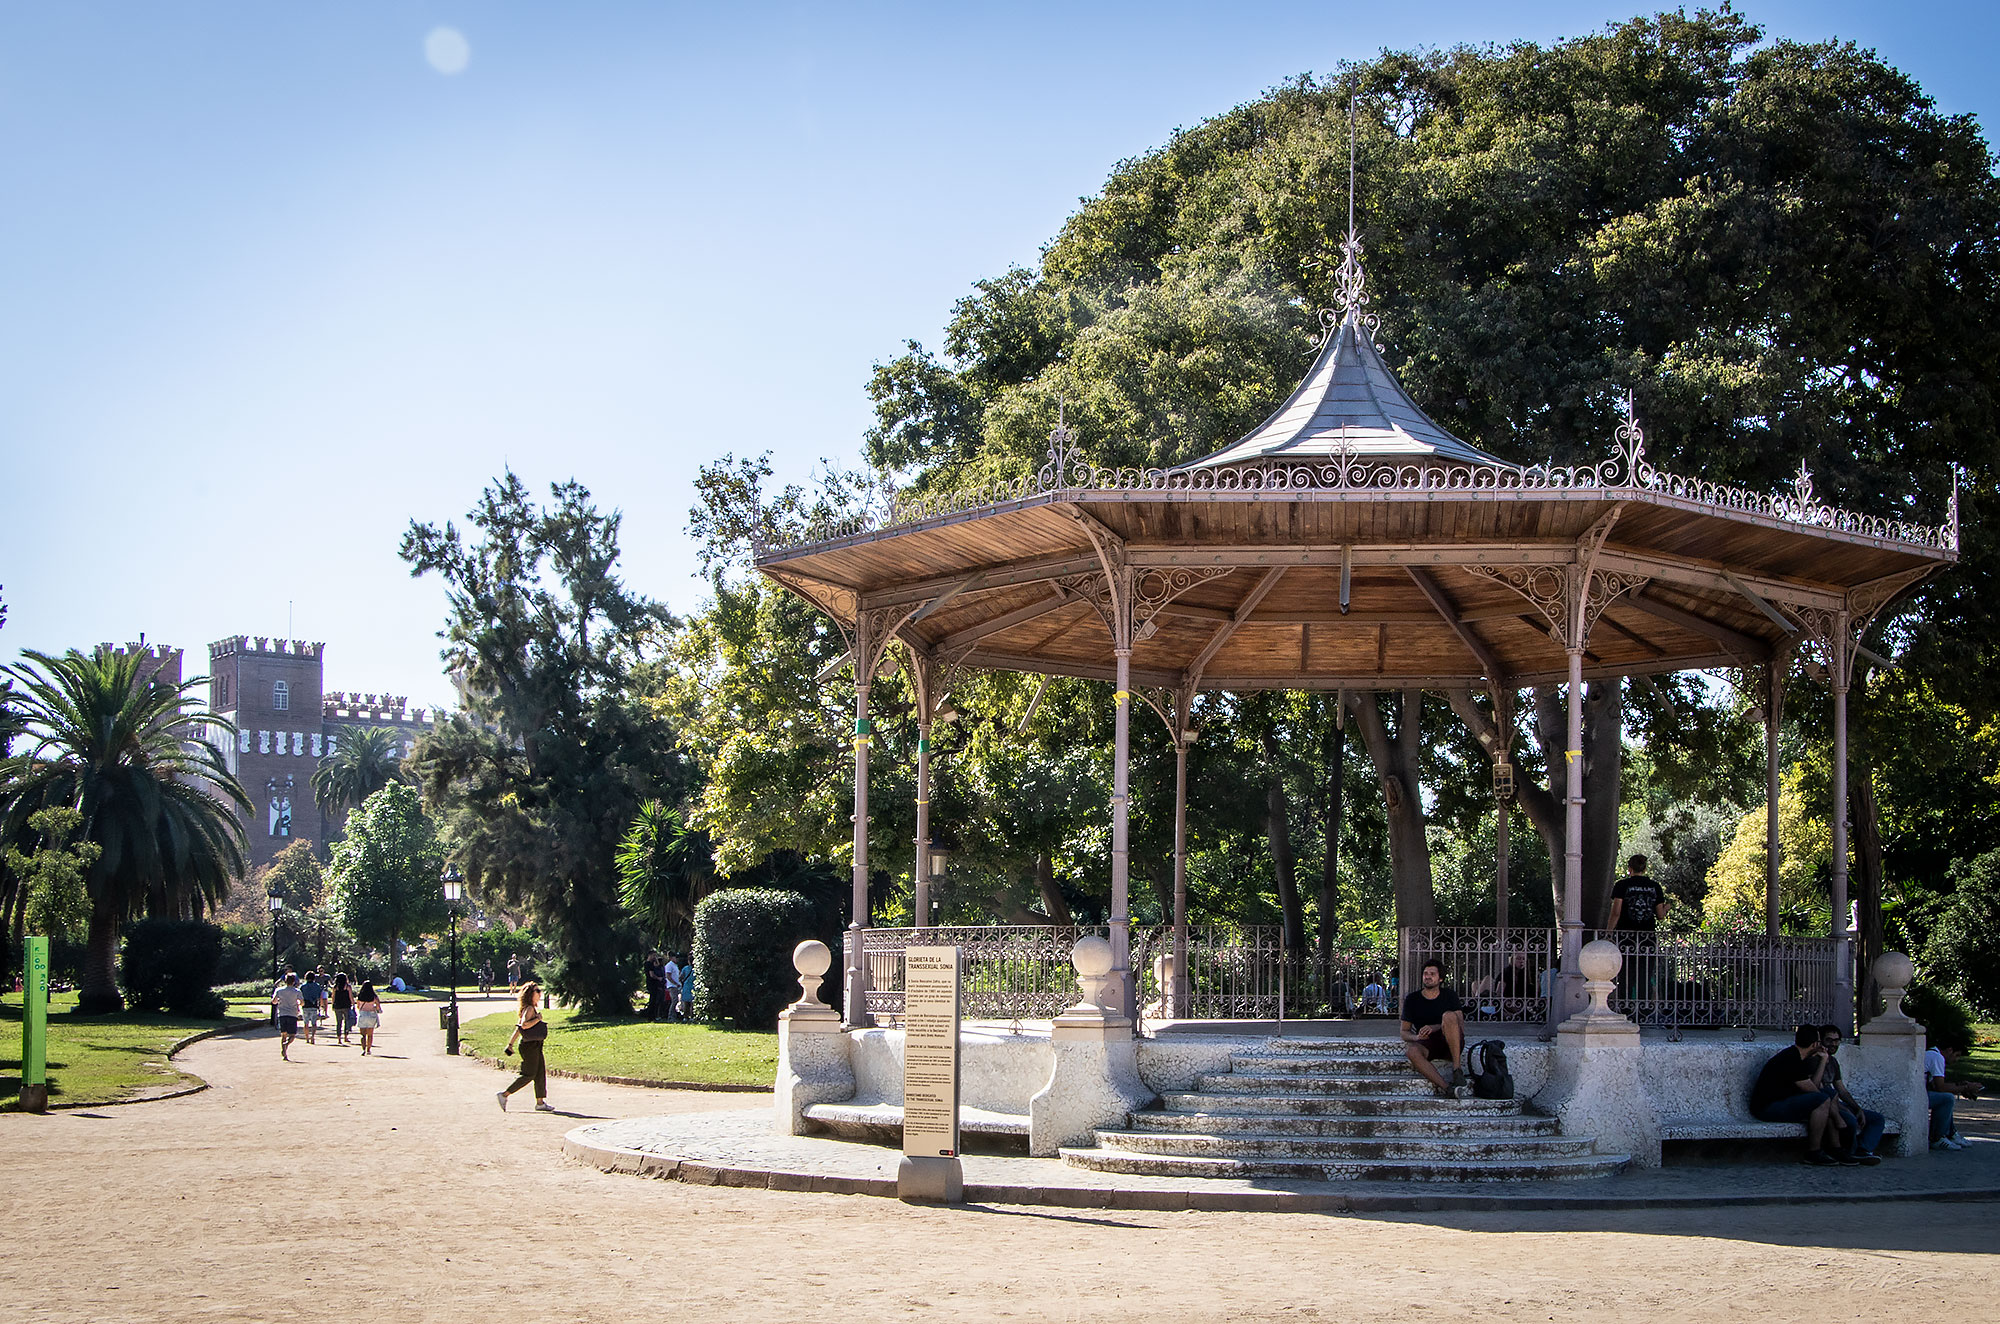   Ciutadella Park in Barcelona